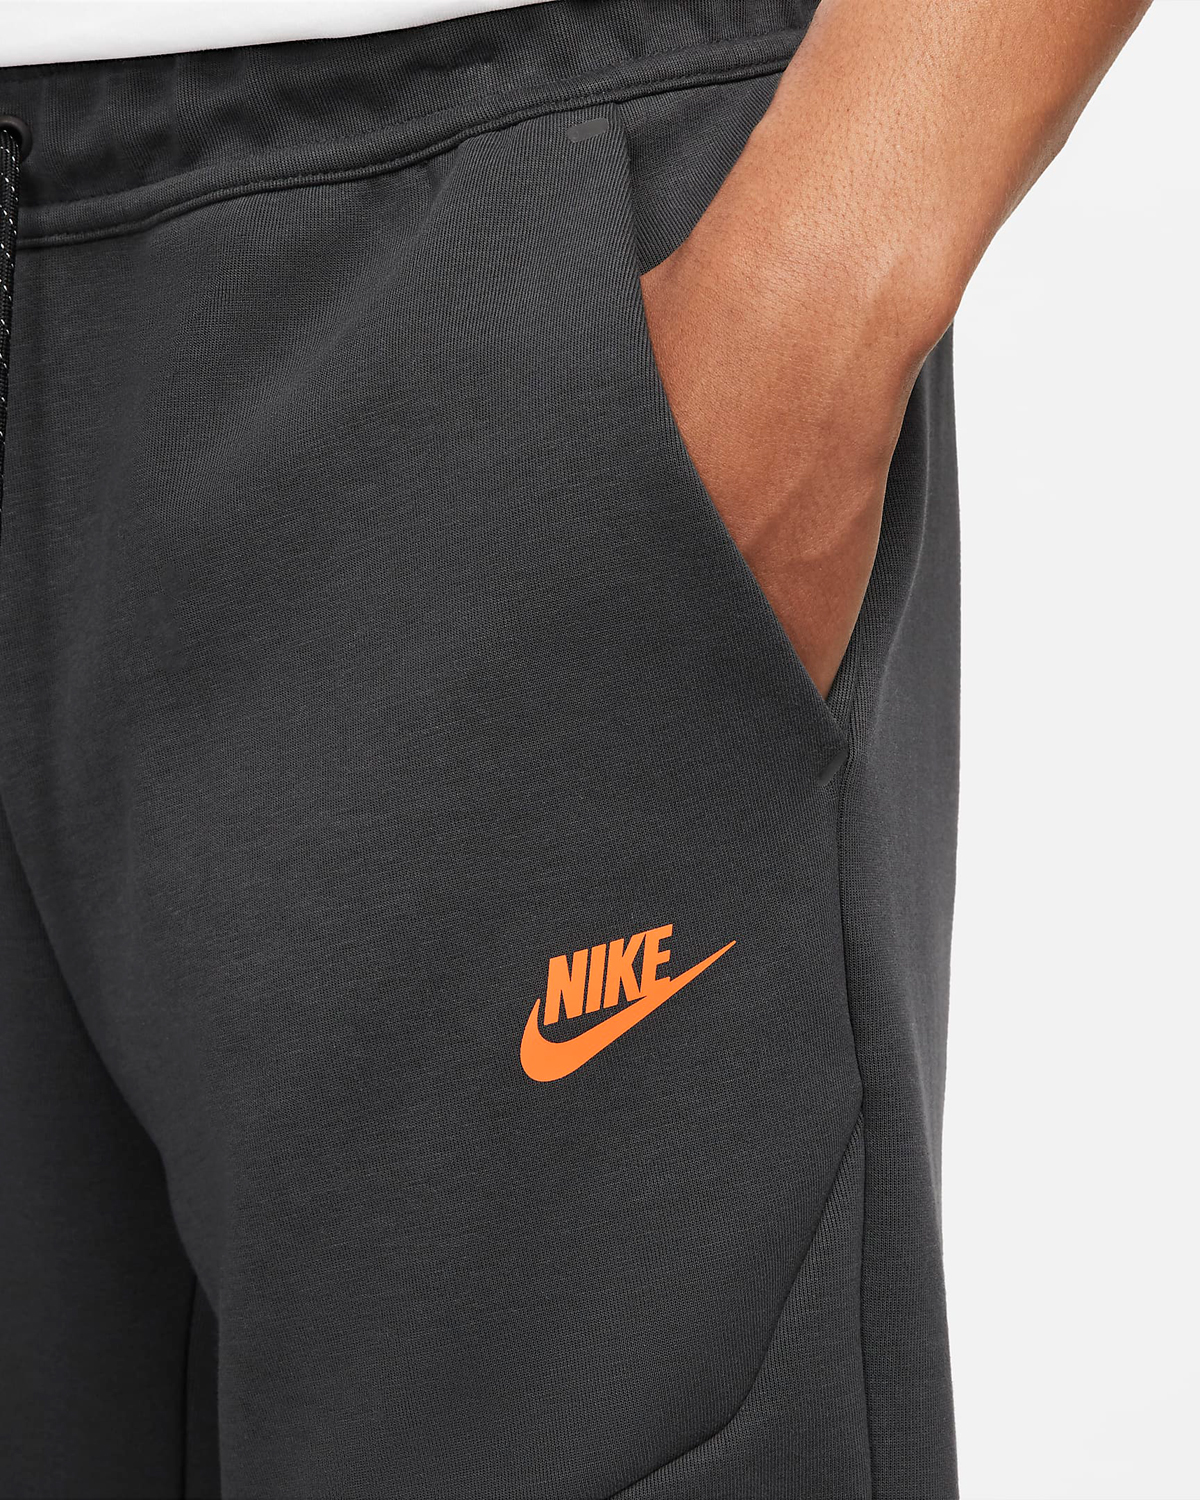 Nike-Tech-Fleece-Jogger-Pants-Dark-Smoke-Grey-Safety-Orange-2